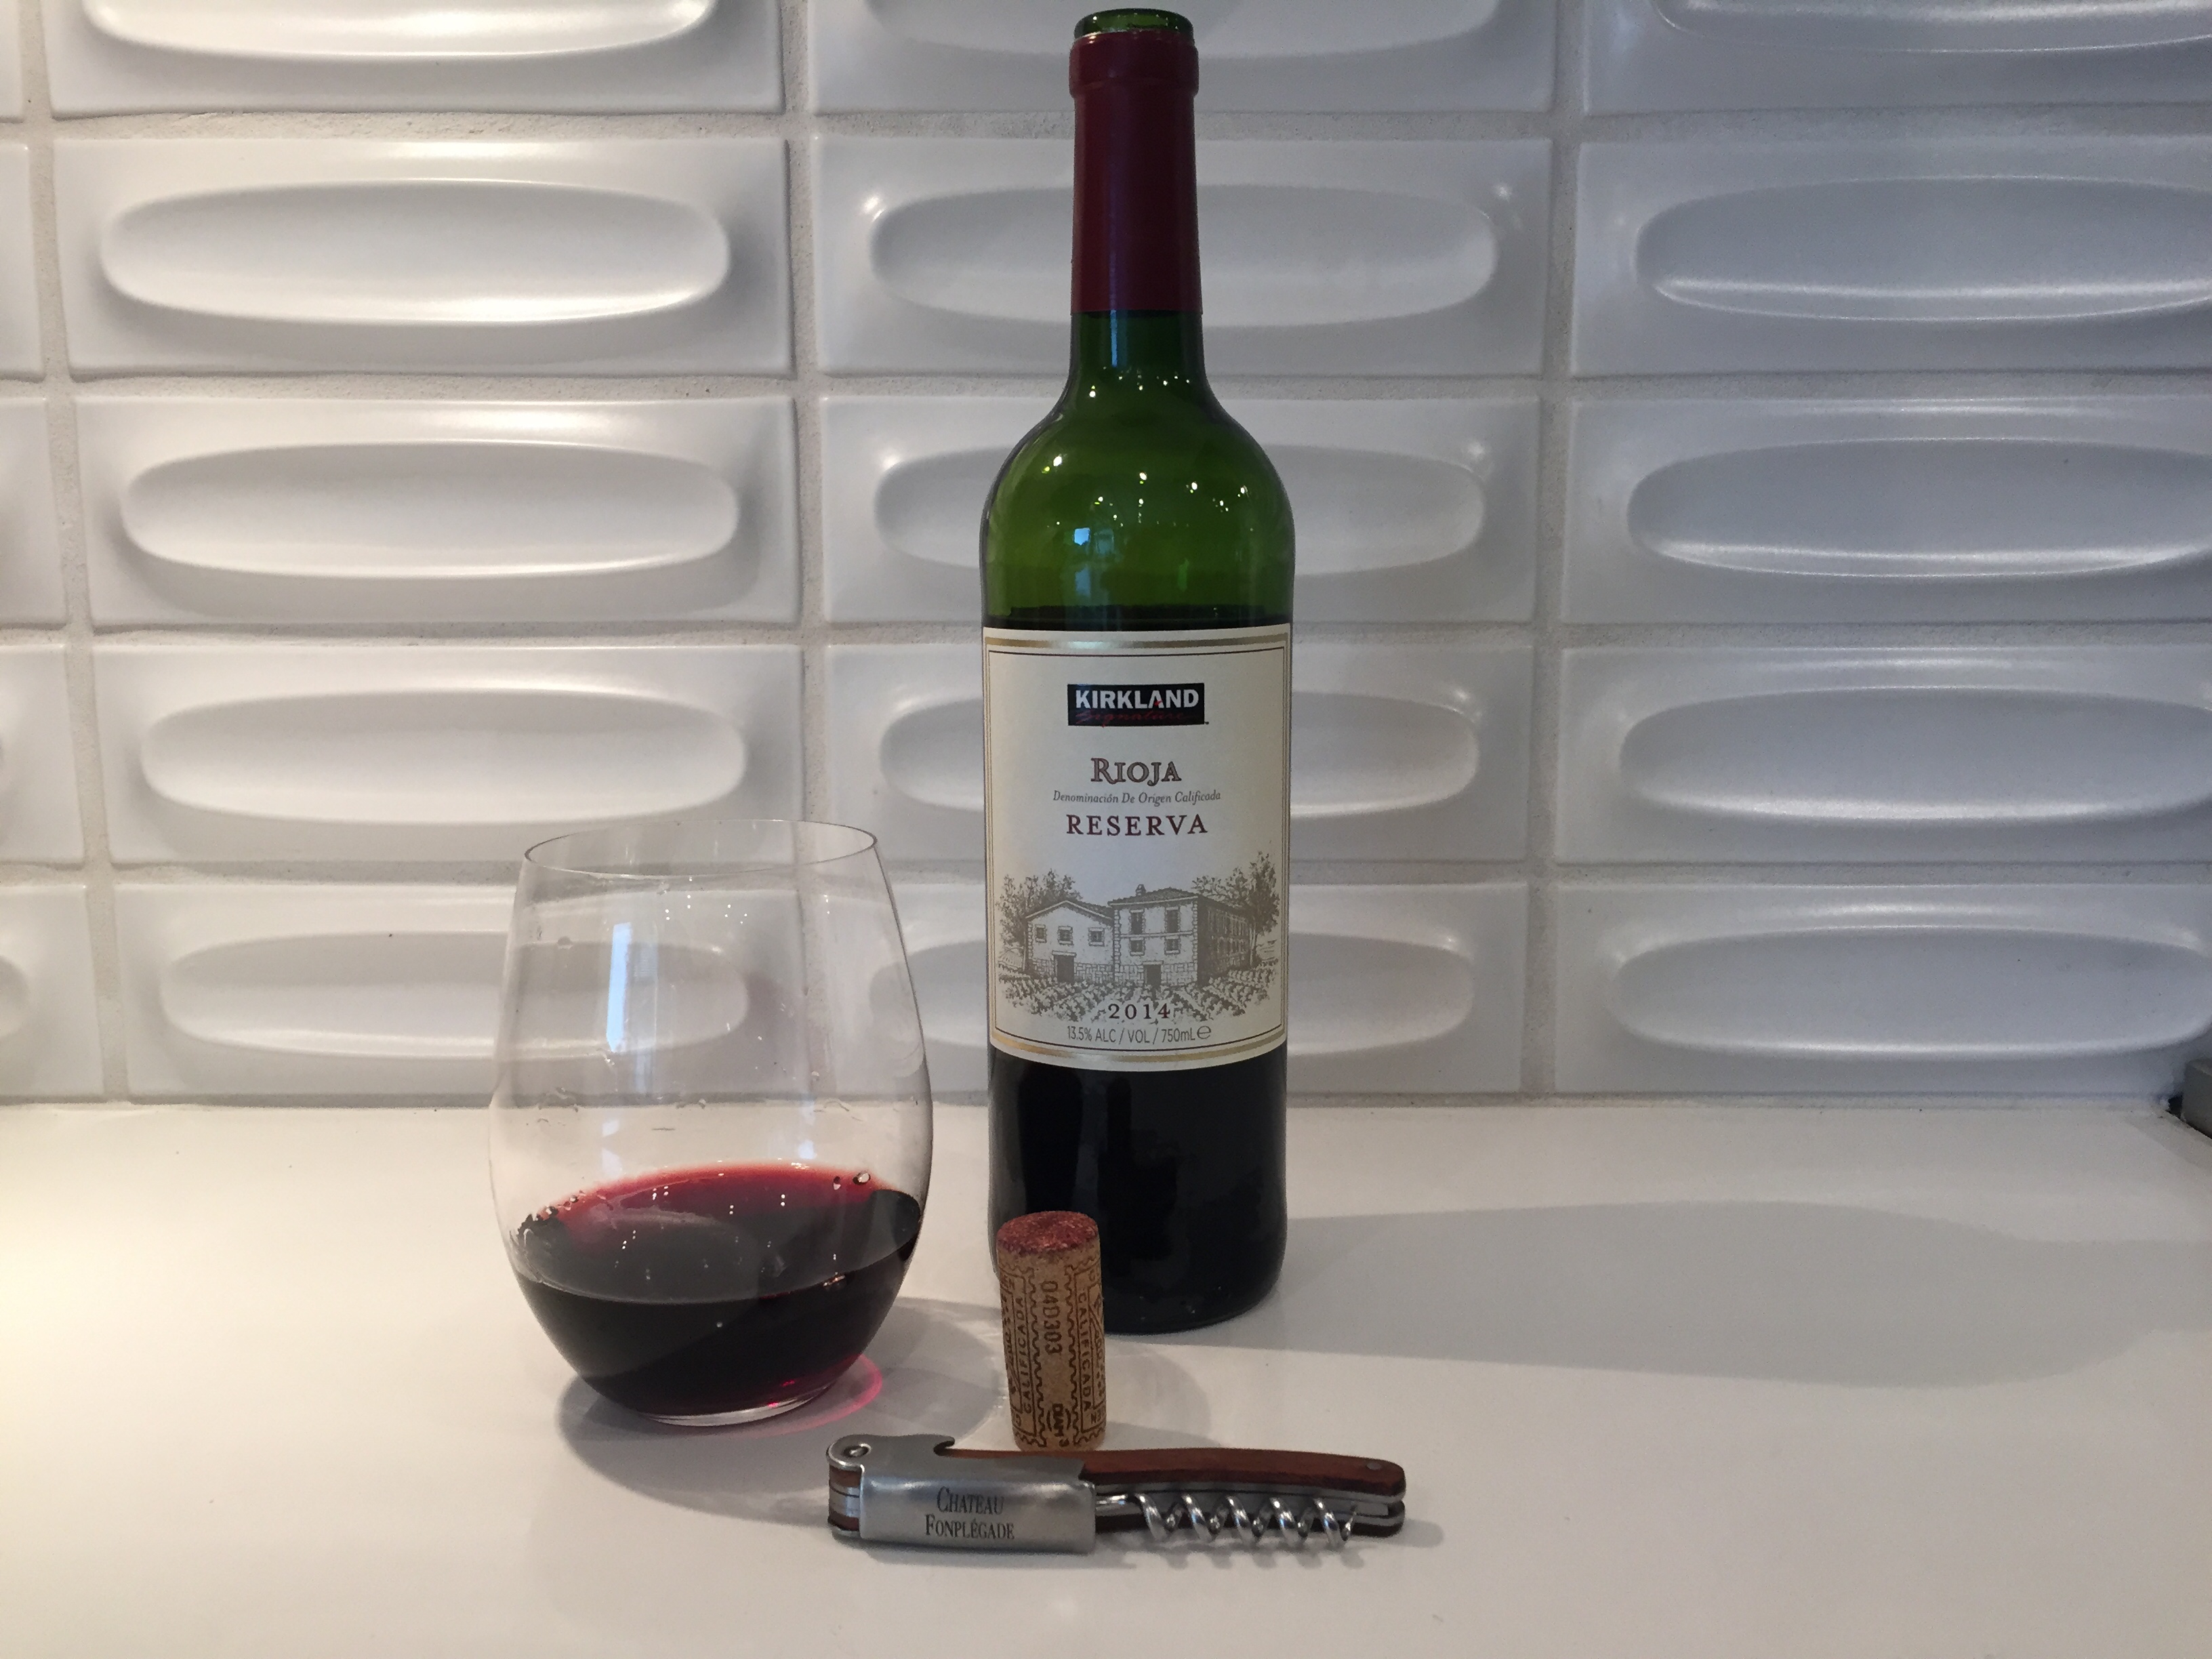 Bottle of 2014 Kirkland Signature Rioja Reserva, Spain